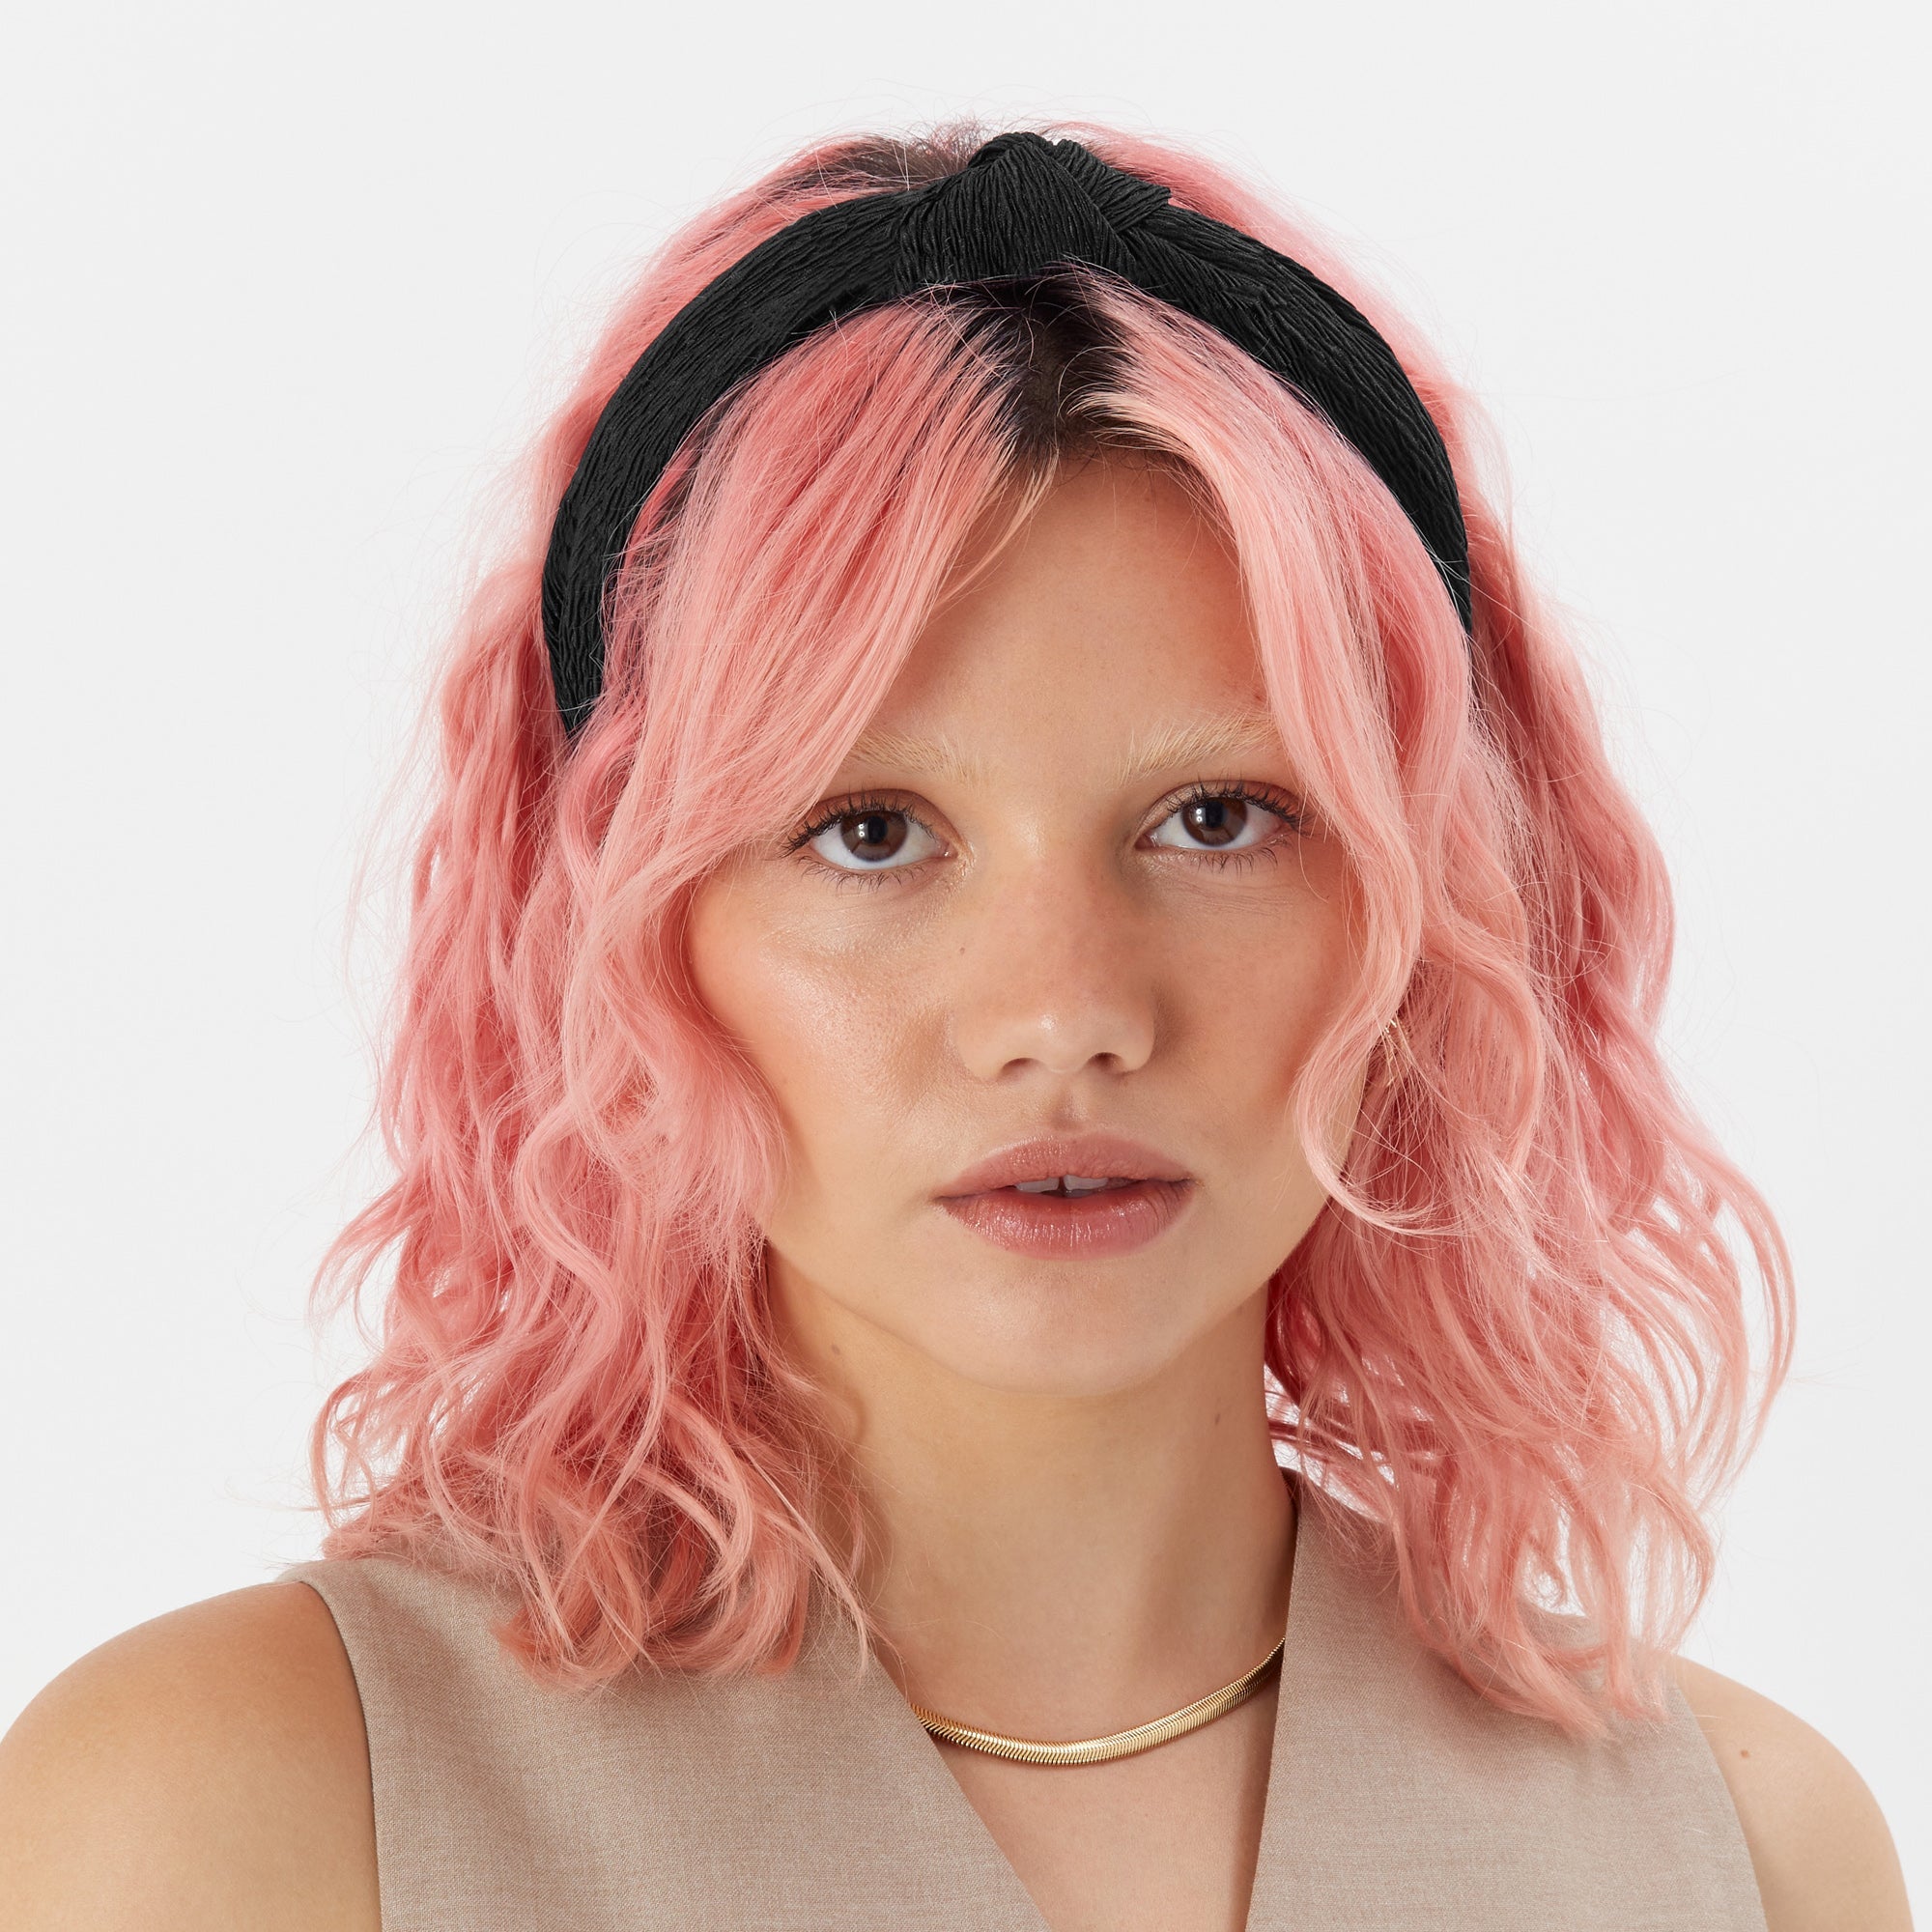 Buy Hairband Dot - Knot Polka India Alice White Accessorize